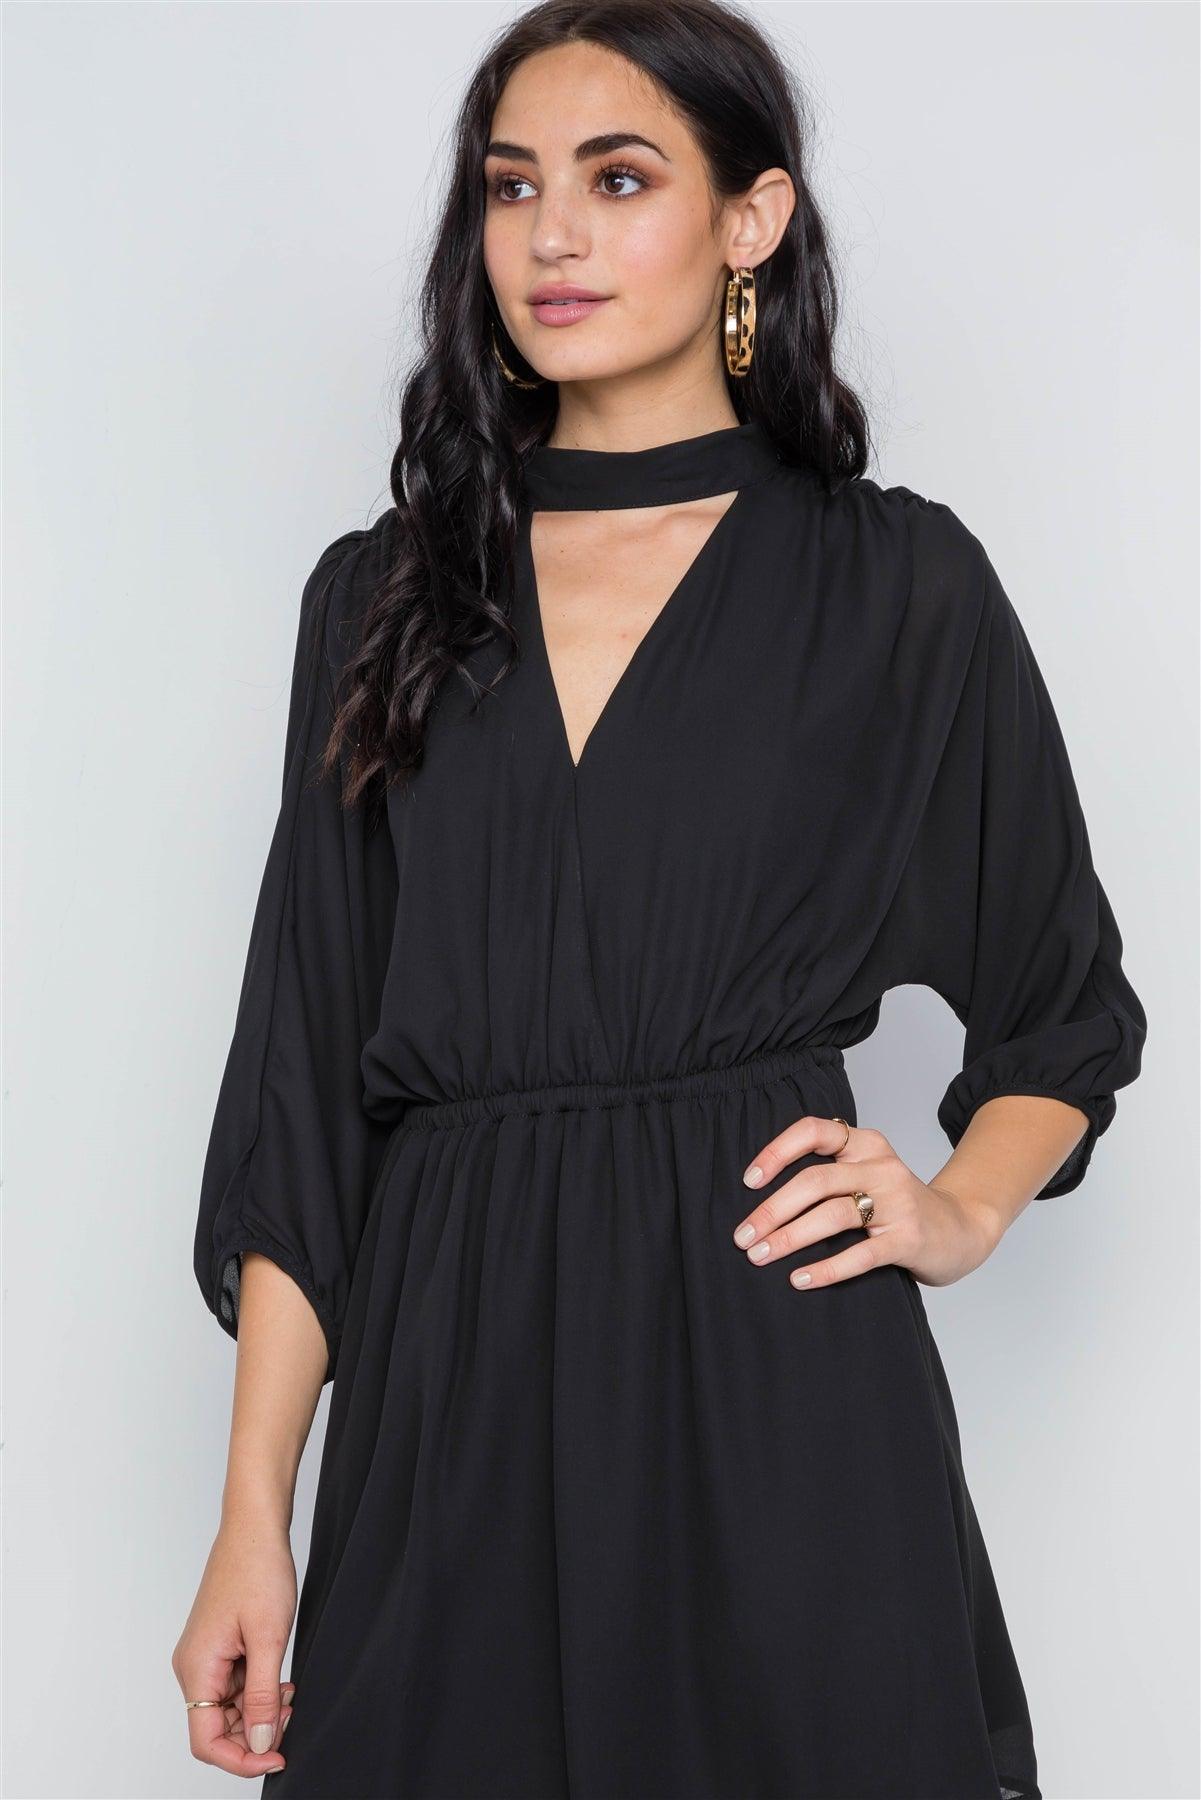 Black Batwing Sleeves Solid Mock-Neck Mini Dress /3-3-1